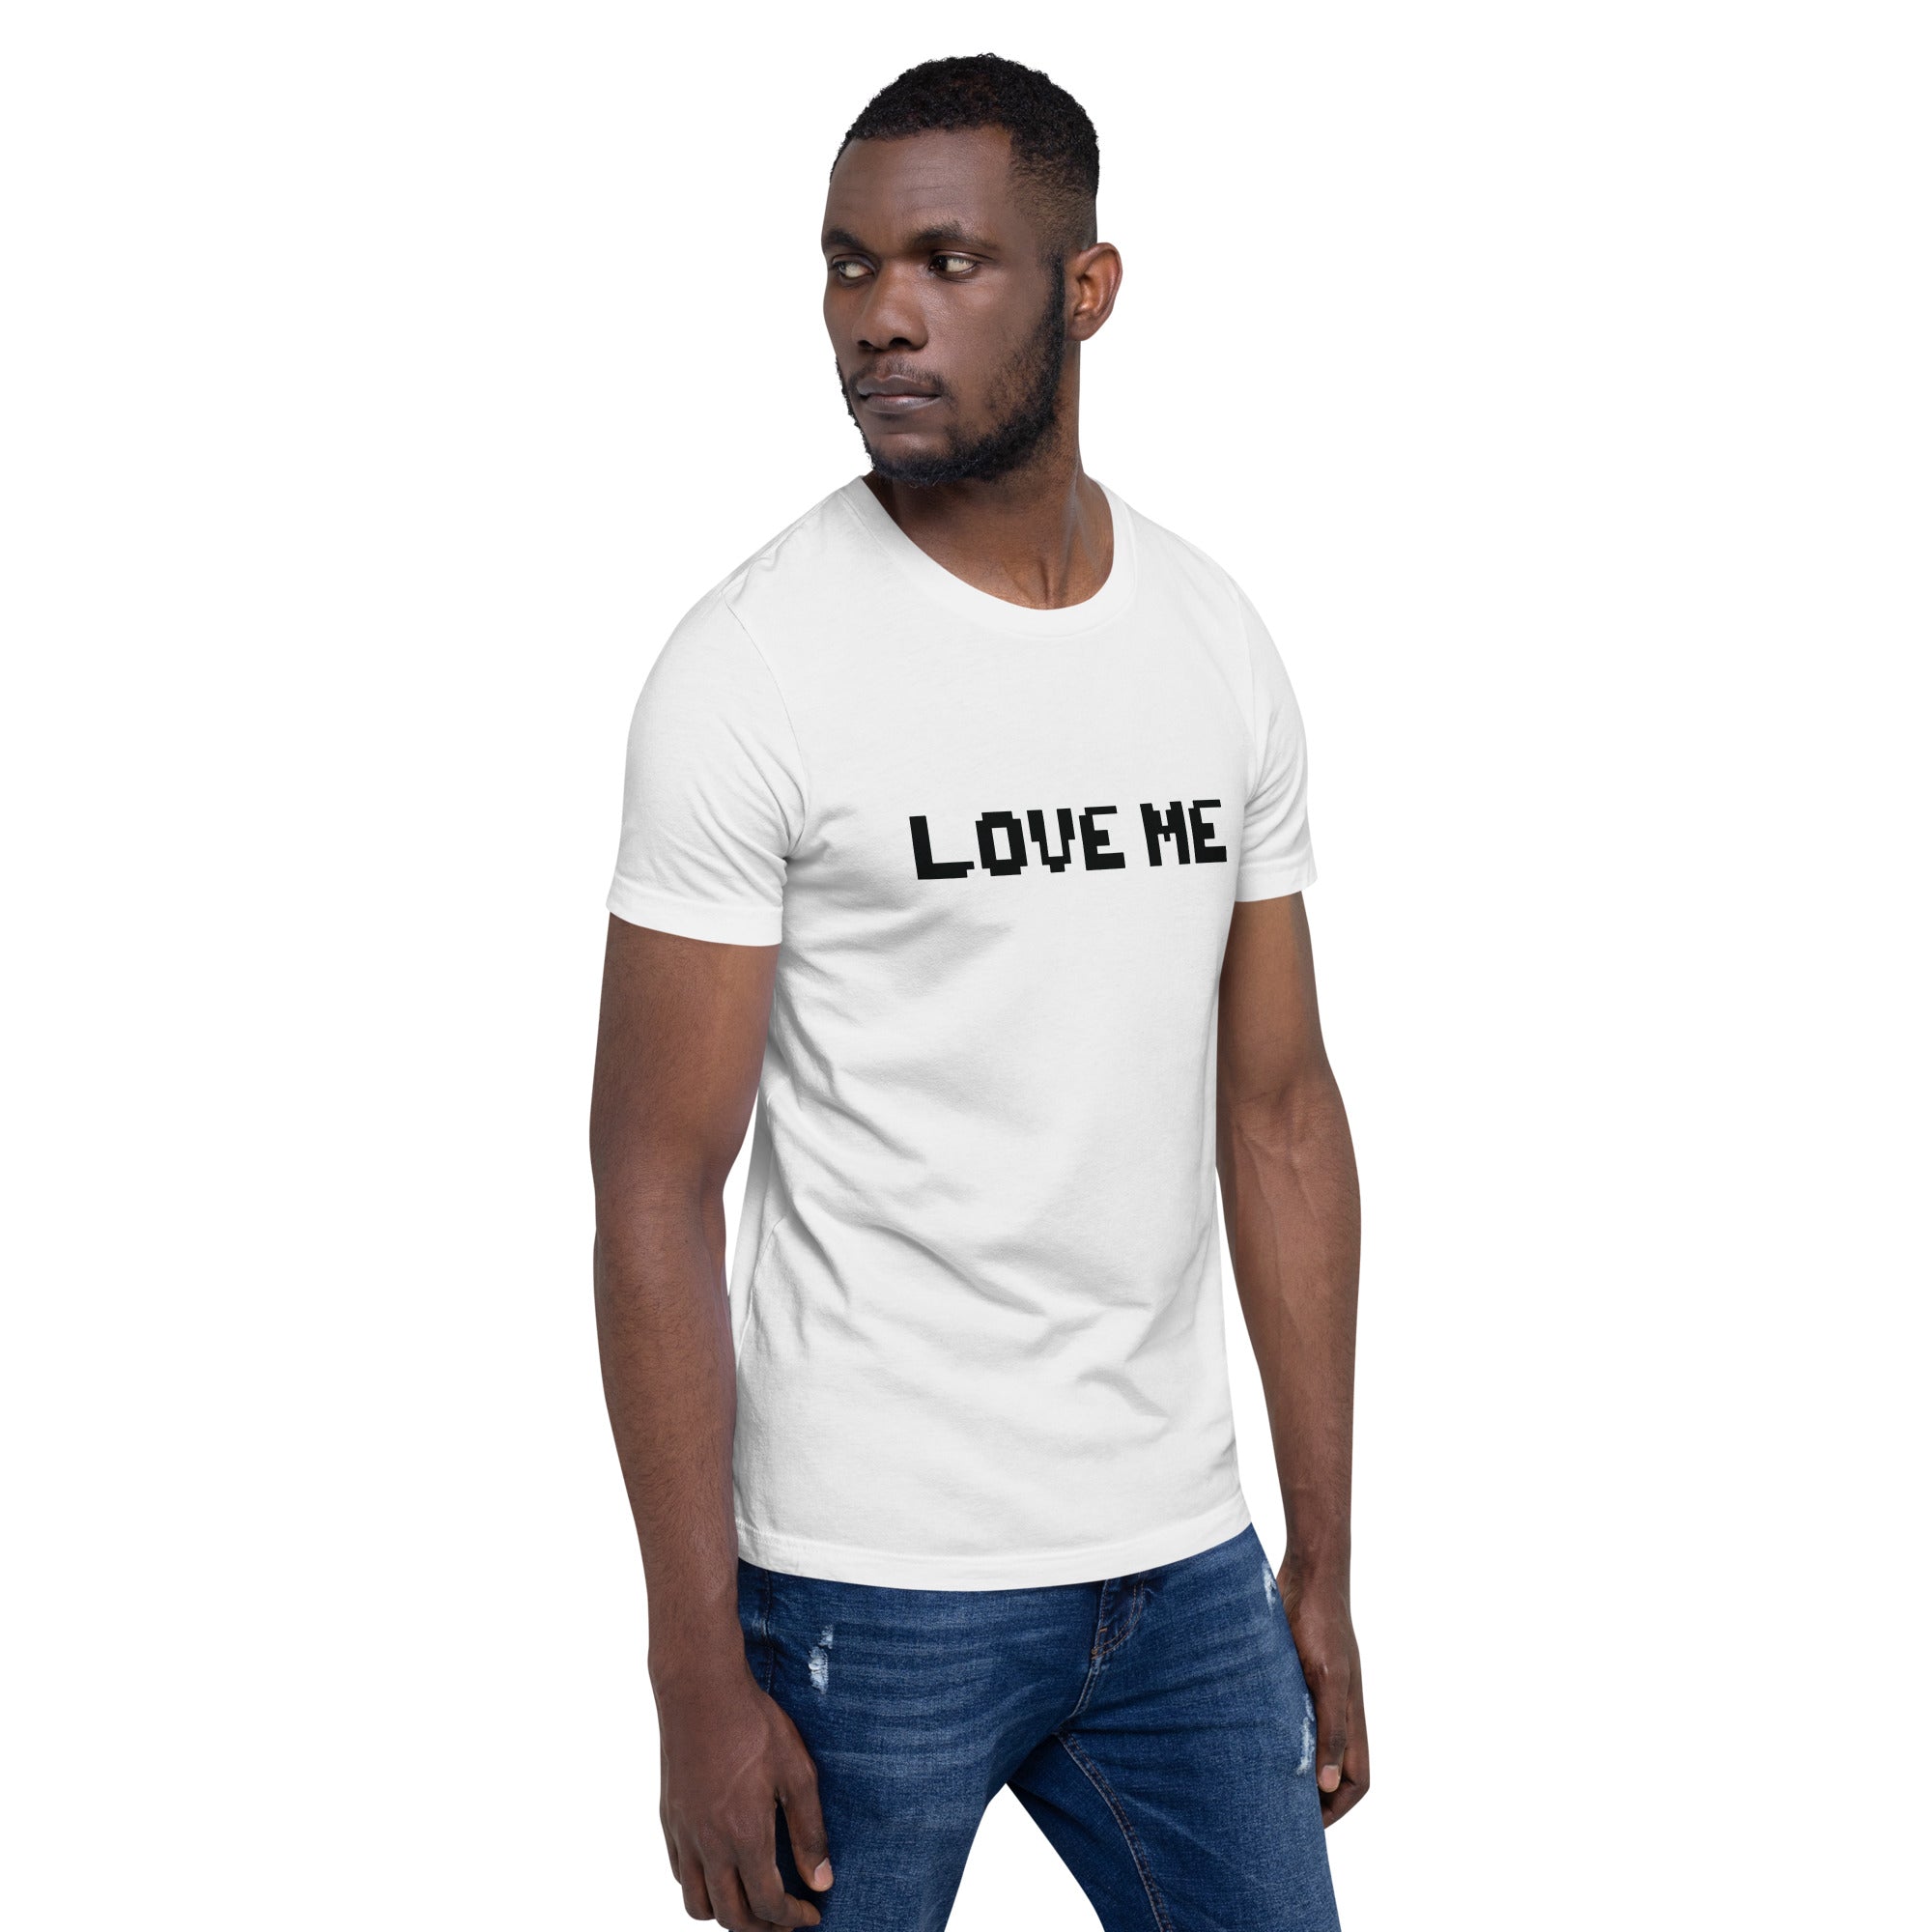 Love Me T-Shirt: White